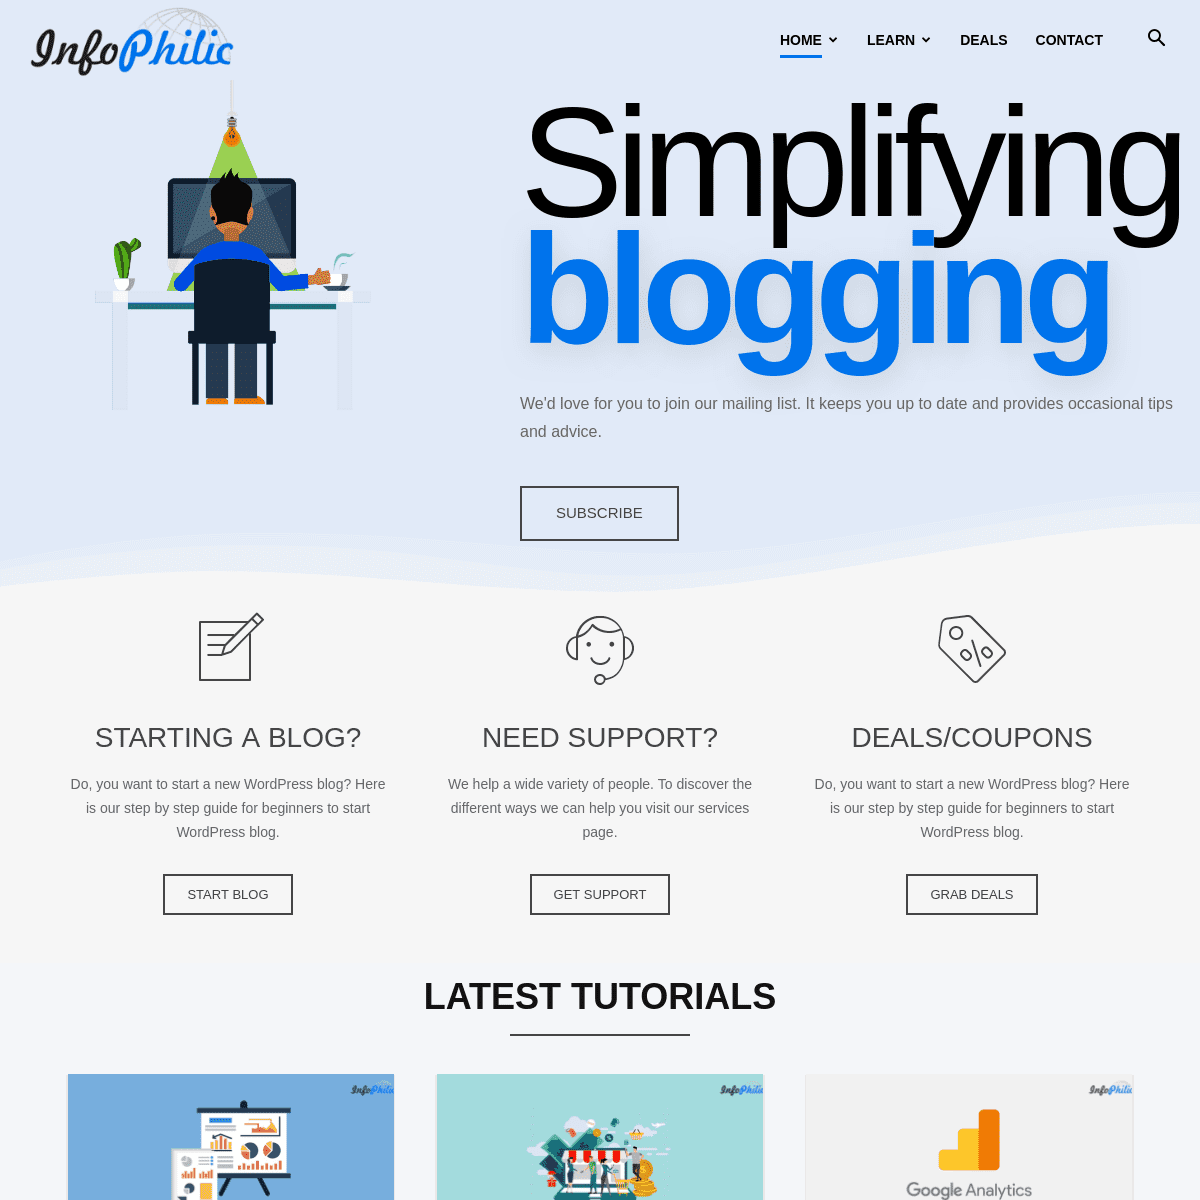 InfoPhilic - Simplifying blogging